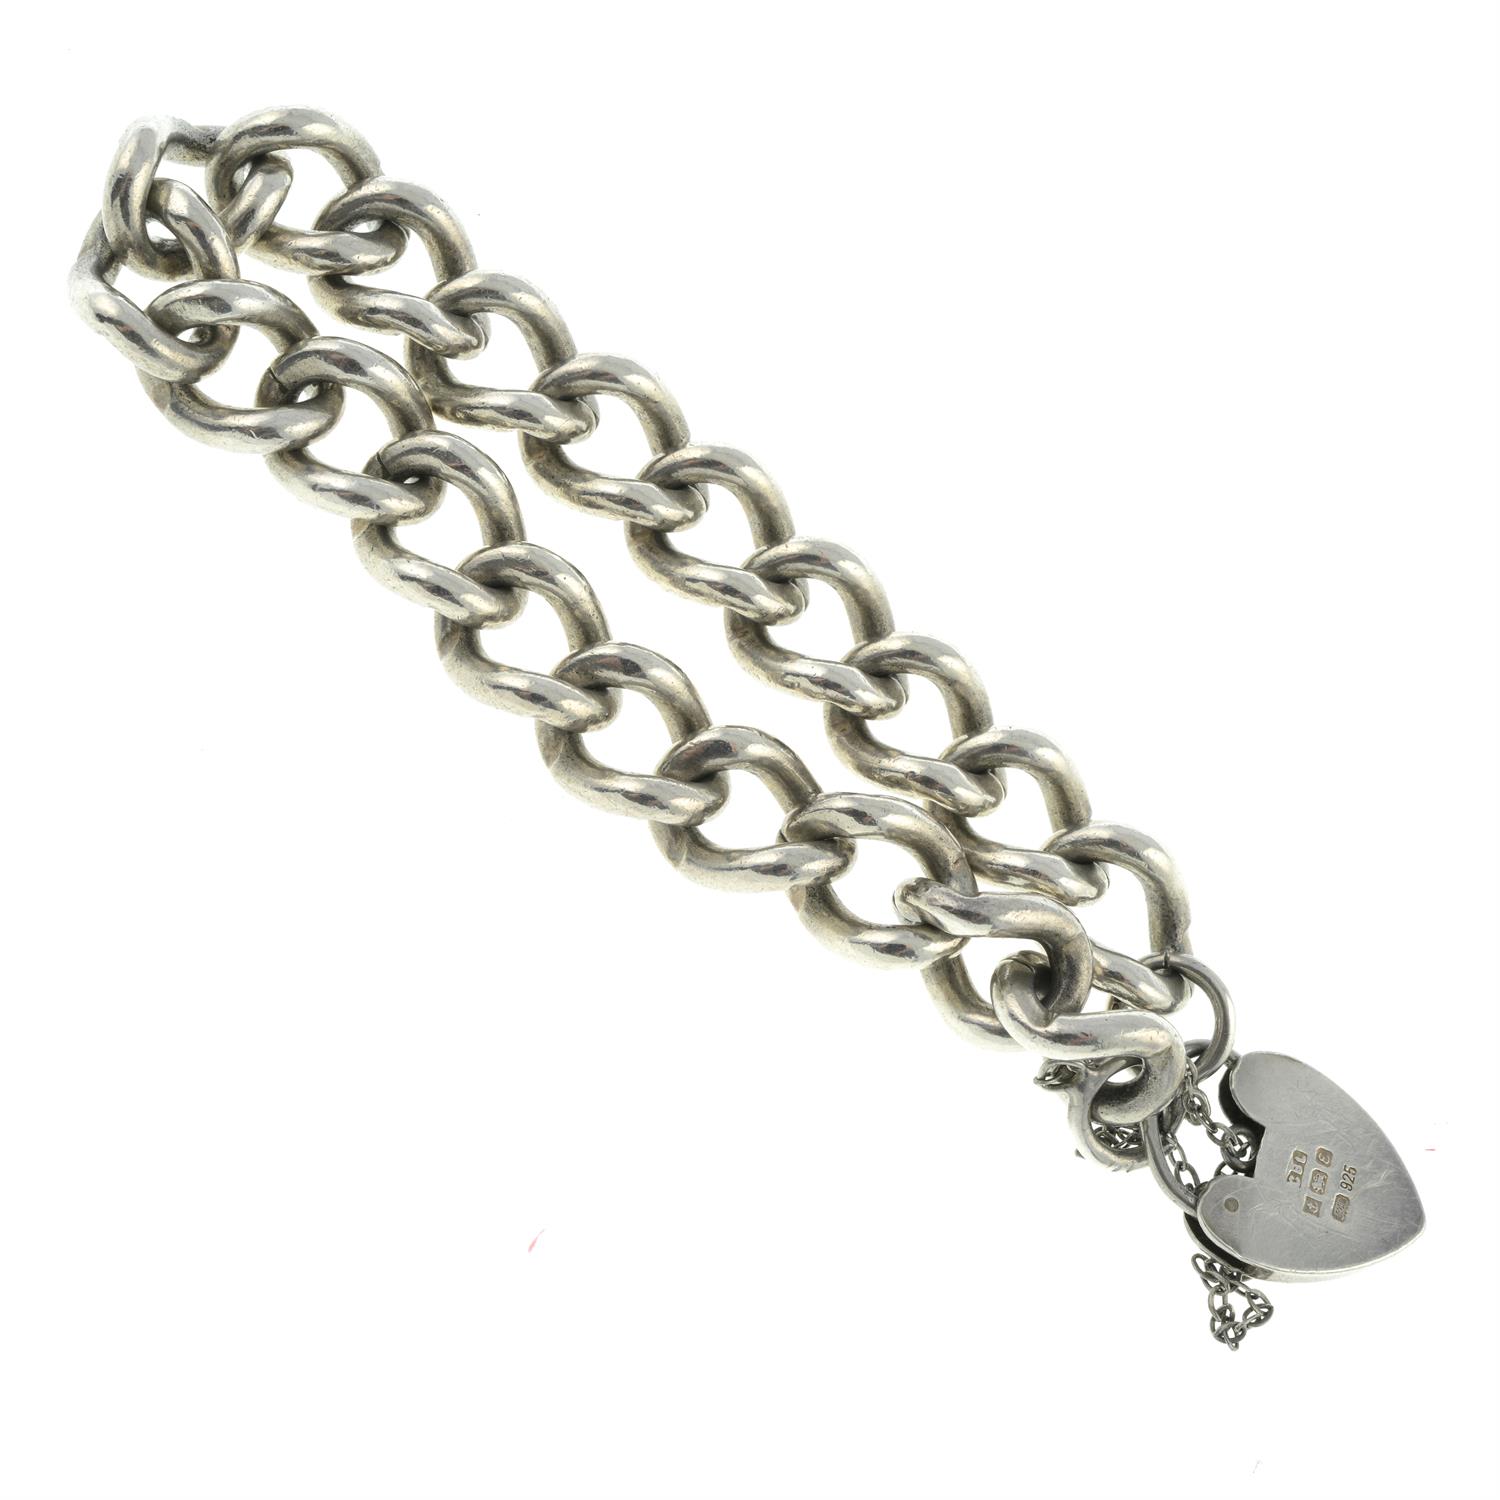 Silver padlock clasp bracelet - Image 2 of 2